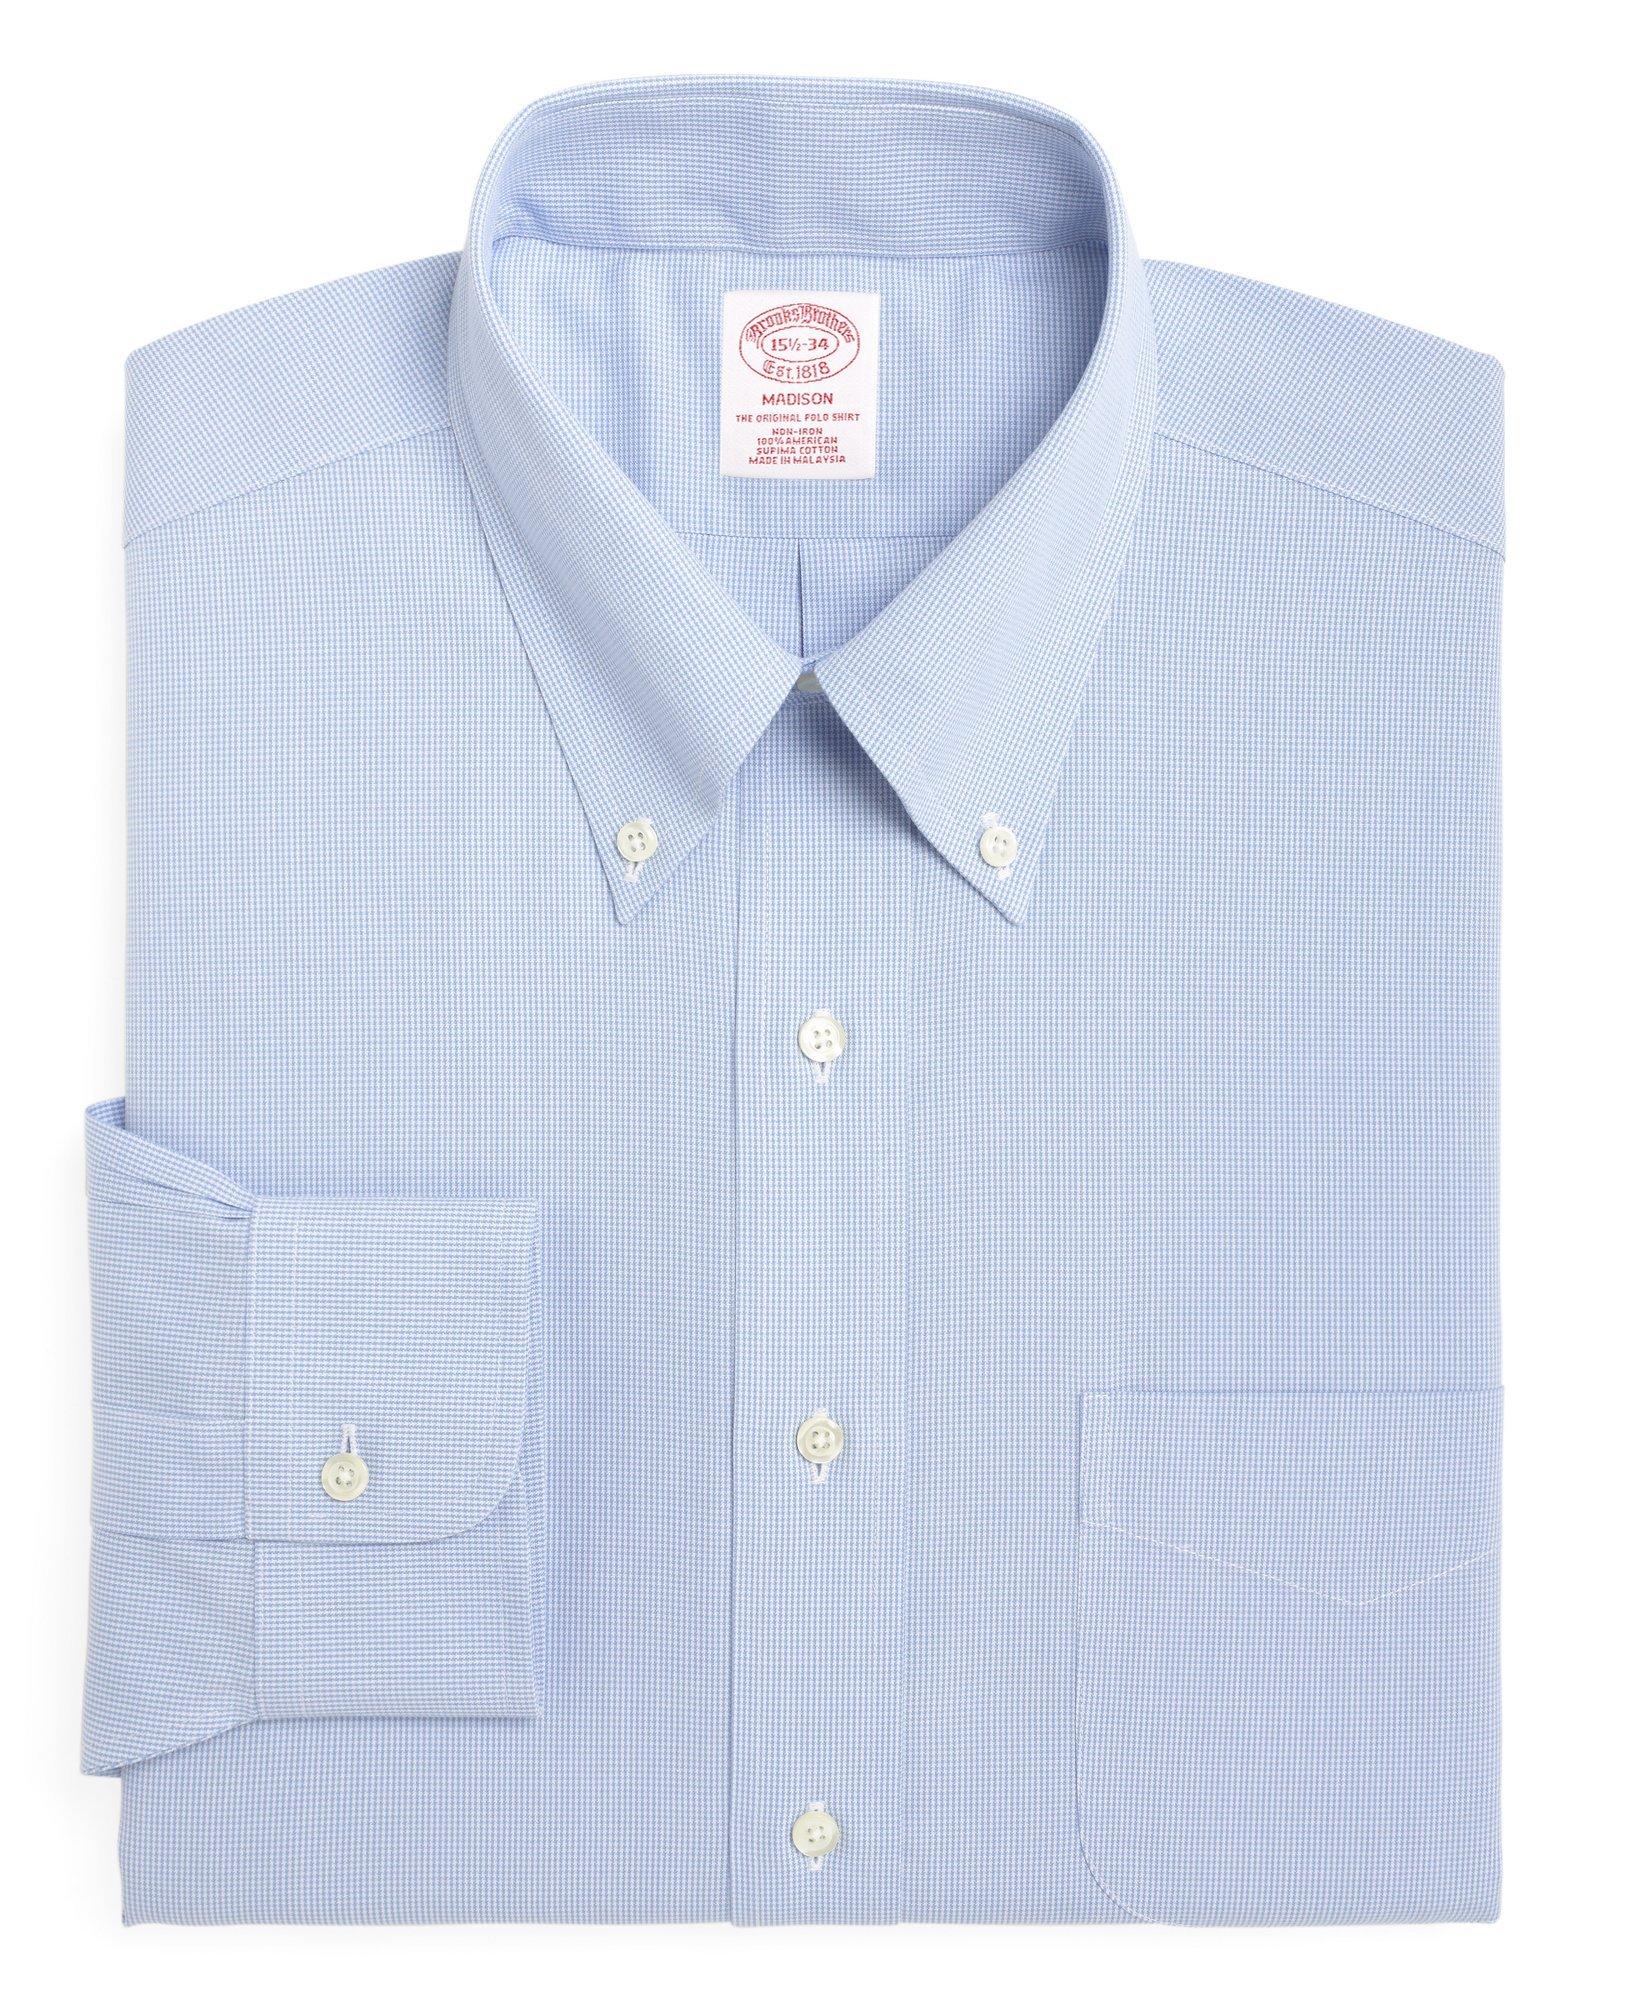 One Shirt, Two Shirt, White Shirt, Blue Shirt – Put This On